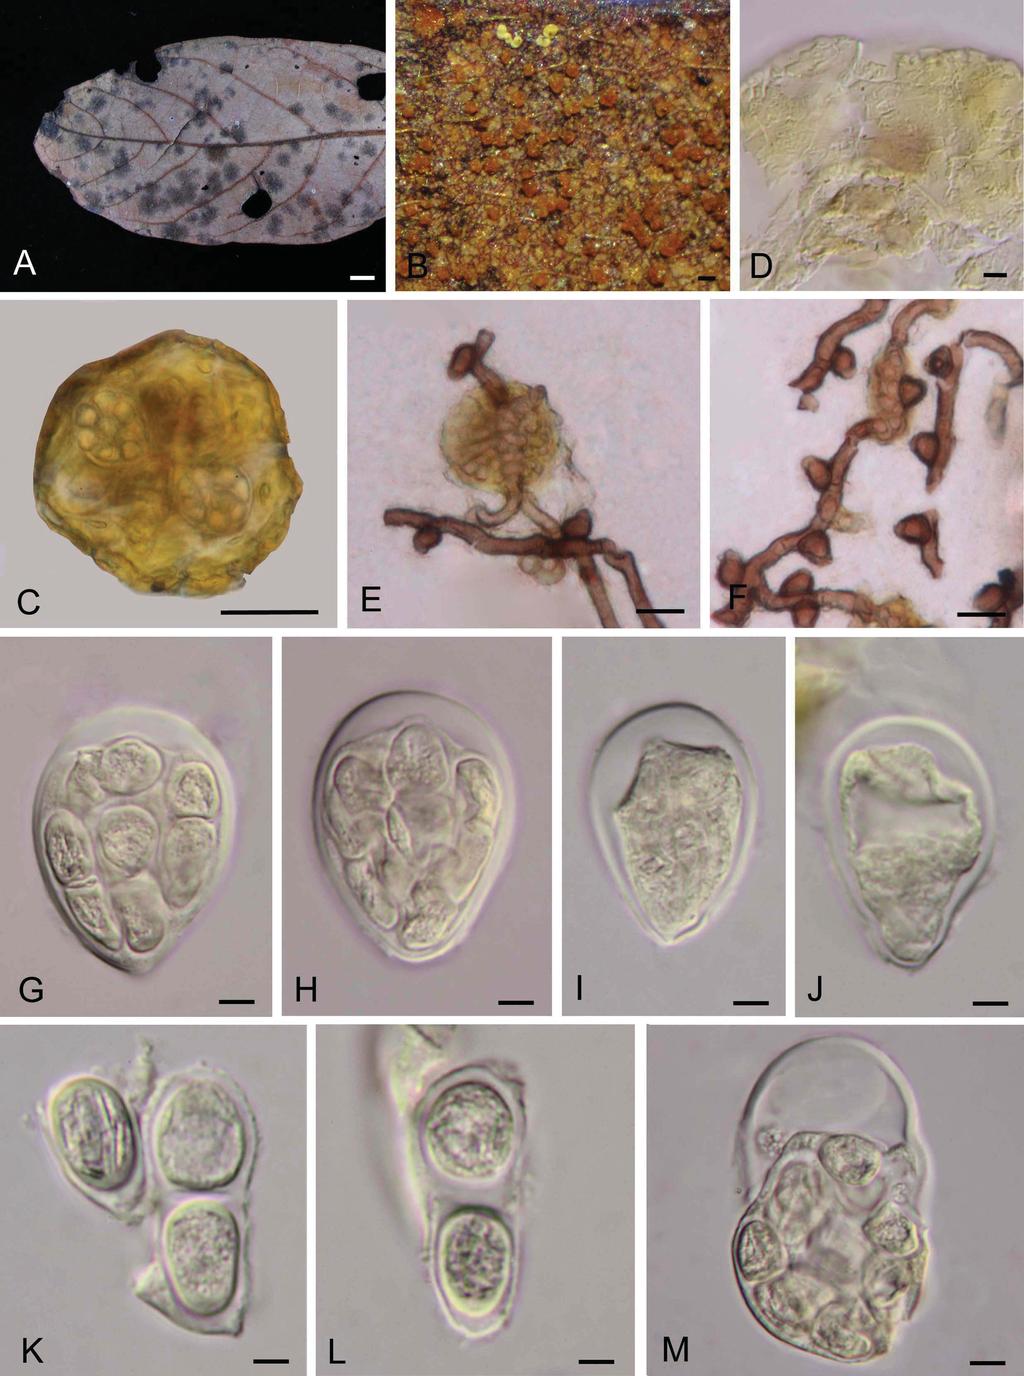 FIGURE 4. Rhytidenglerula carnea (holotype) A. Colonies on lower surface of leaf. B. Ascomata on mycelium. C. Ascoma containing asci. D. Squash of ascoma. E. Young ascoma on hyphae. F.